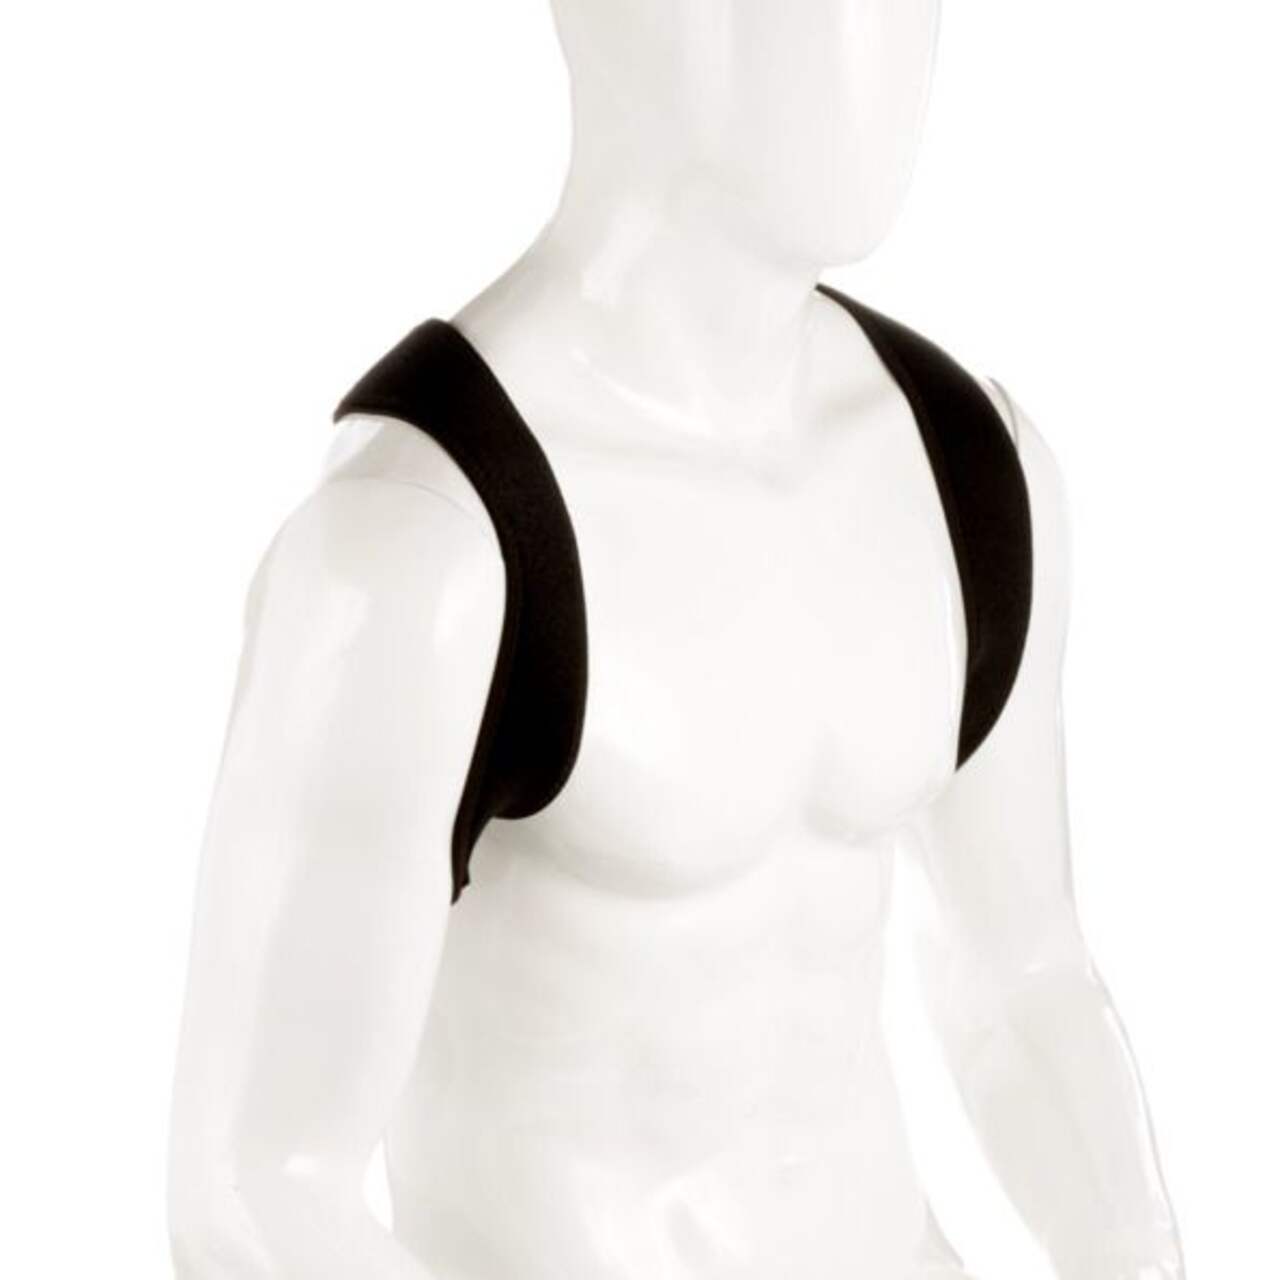  POAGL Posture Corrector For Men  Universal Fit Adjustable  Upper Back Brace For Clavicle To Support Neck, Back and Shoulder Pain  Relief Kyphosis Straightener Spine Support (Design Patented) : Health 